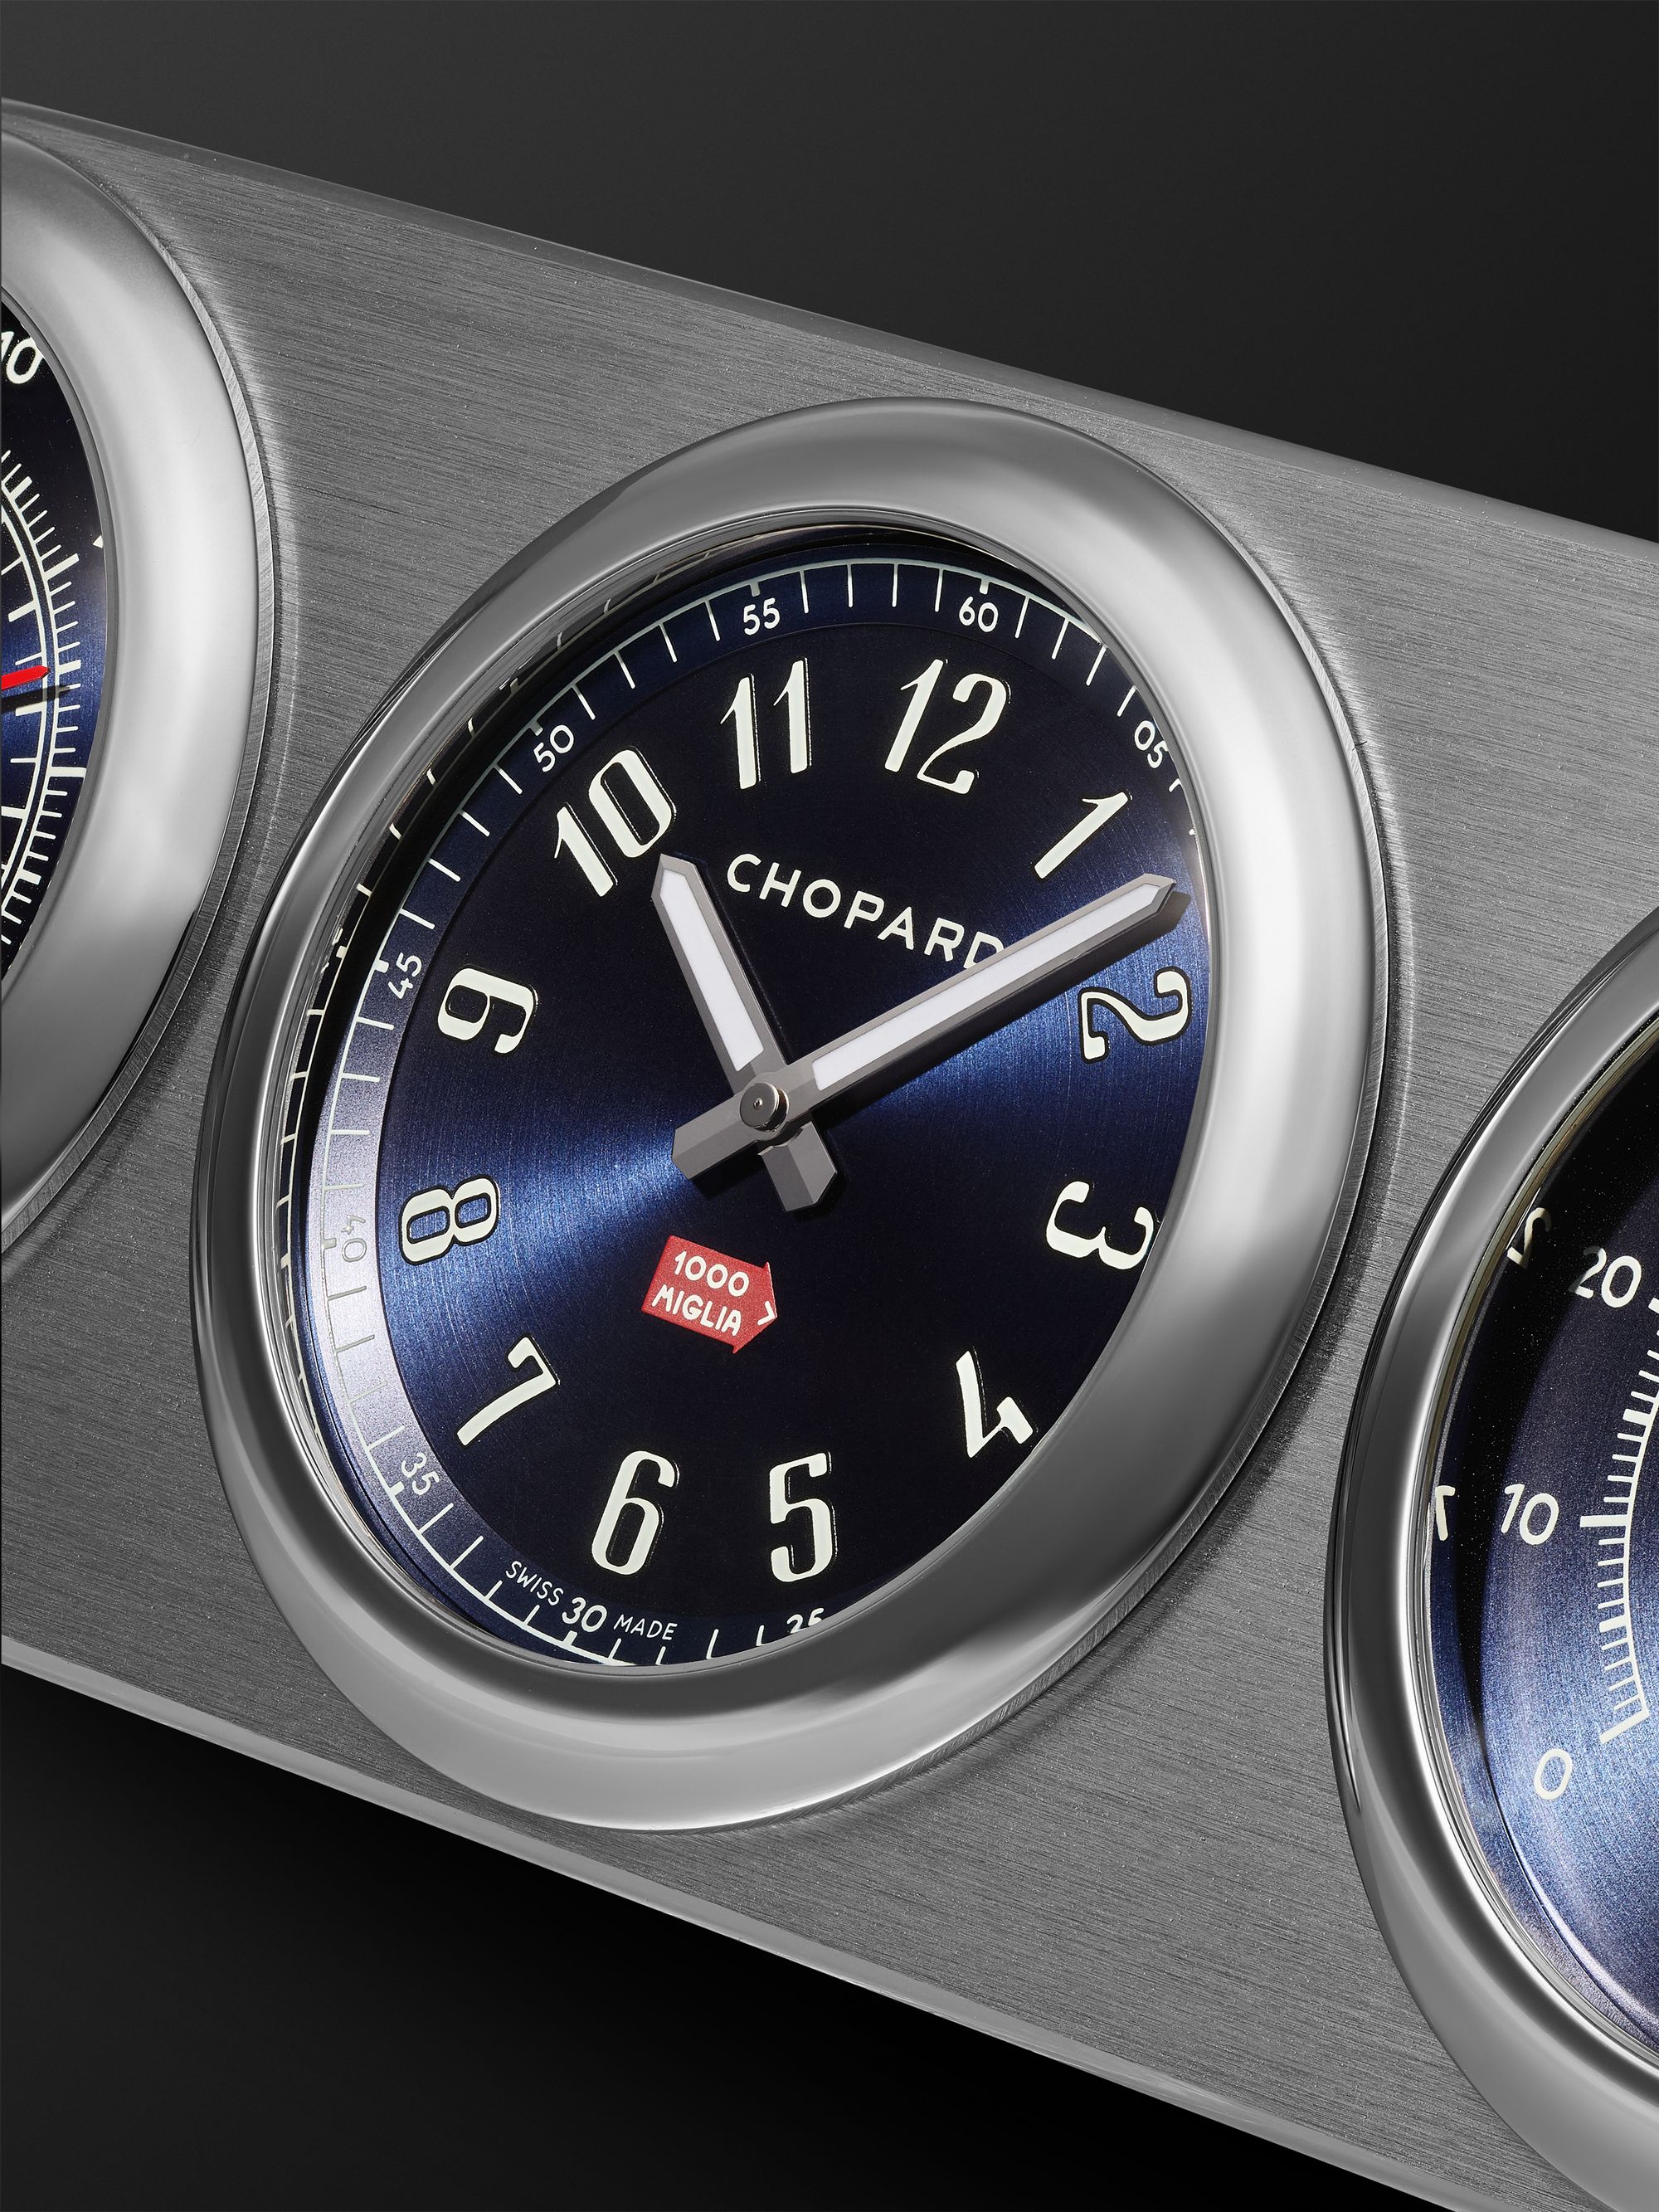 CHOPARD Classic Racing Dashboard Palladium-Plated Table Clock, Ref. No. 95020-0111